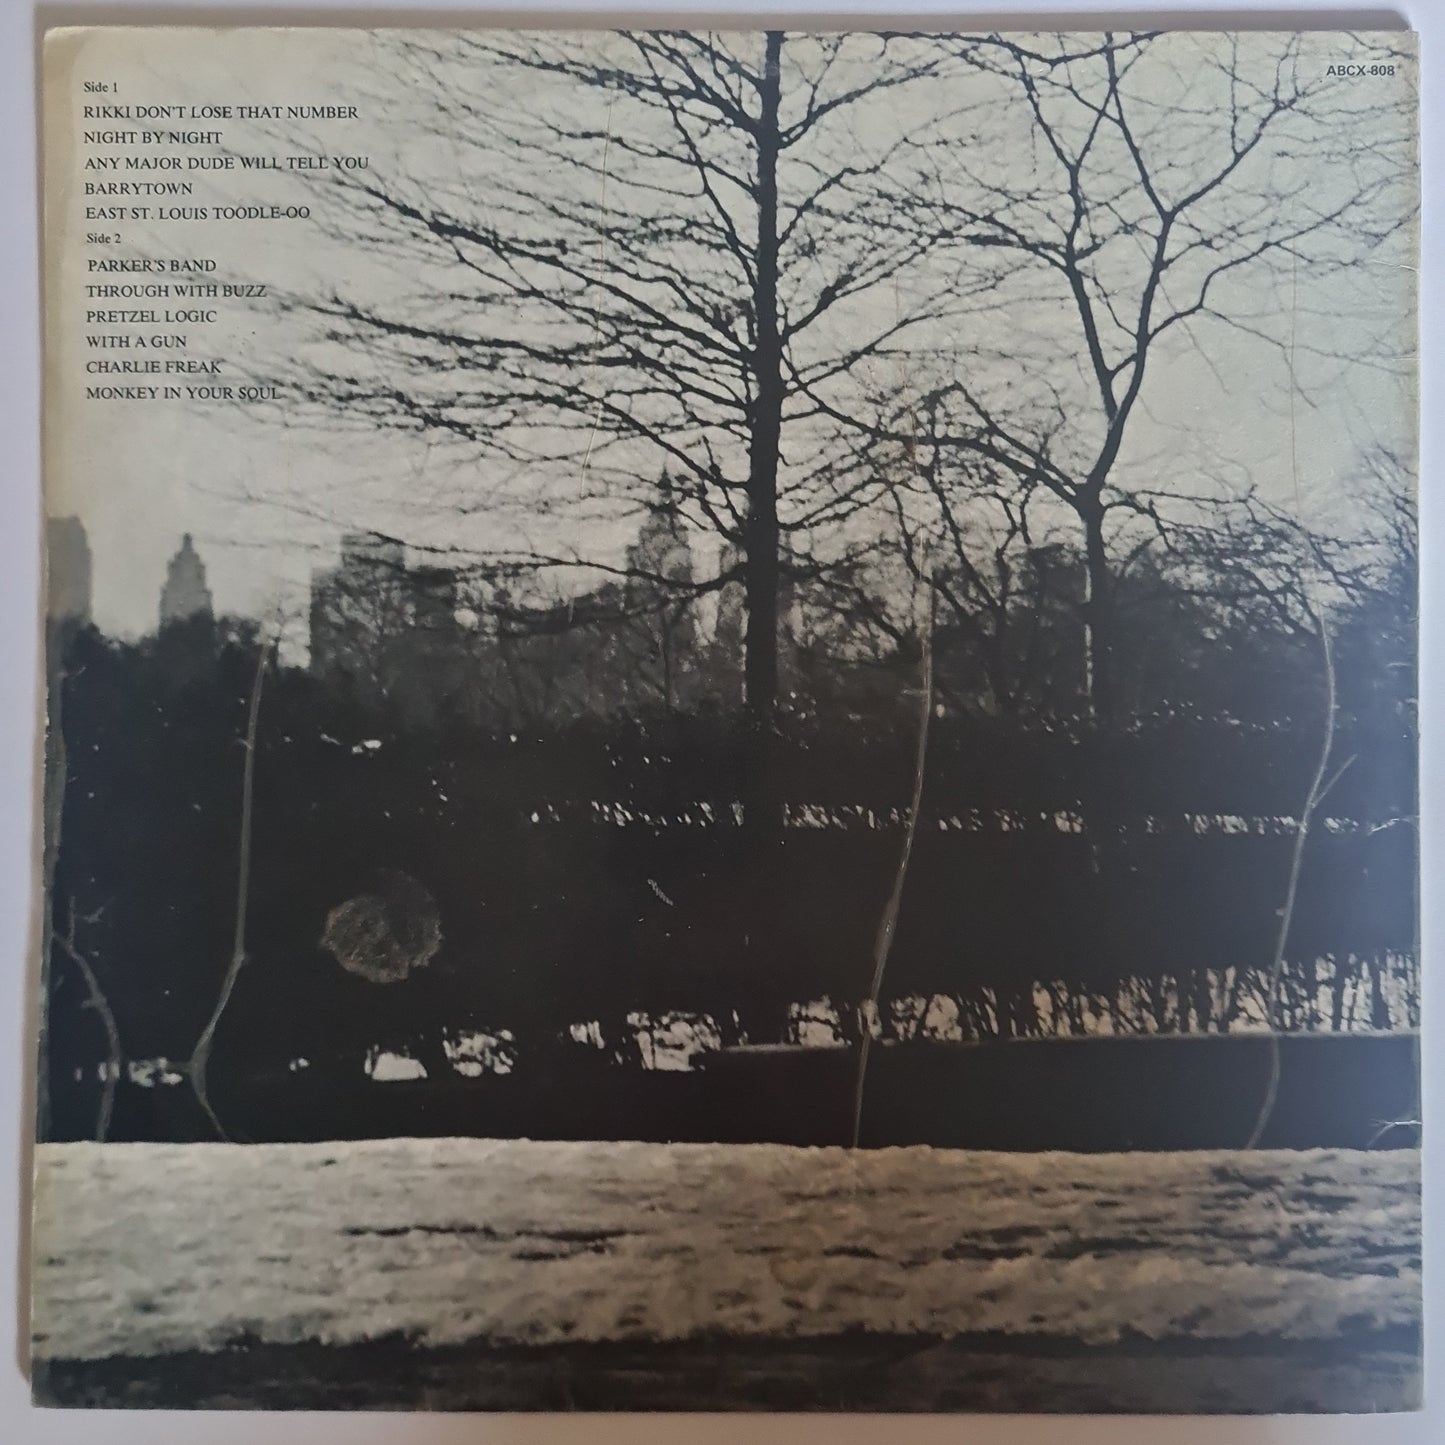 Steely Dan – Pretzel Logic - 1974 (Gatefold) - Vinyl Record